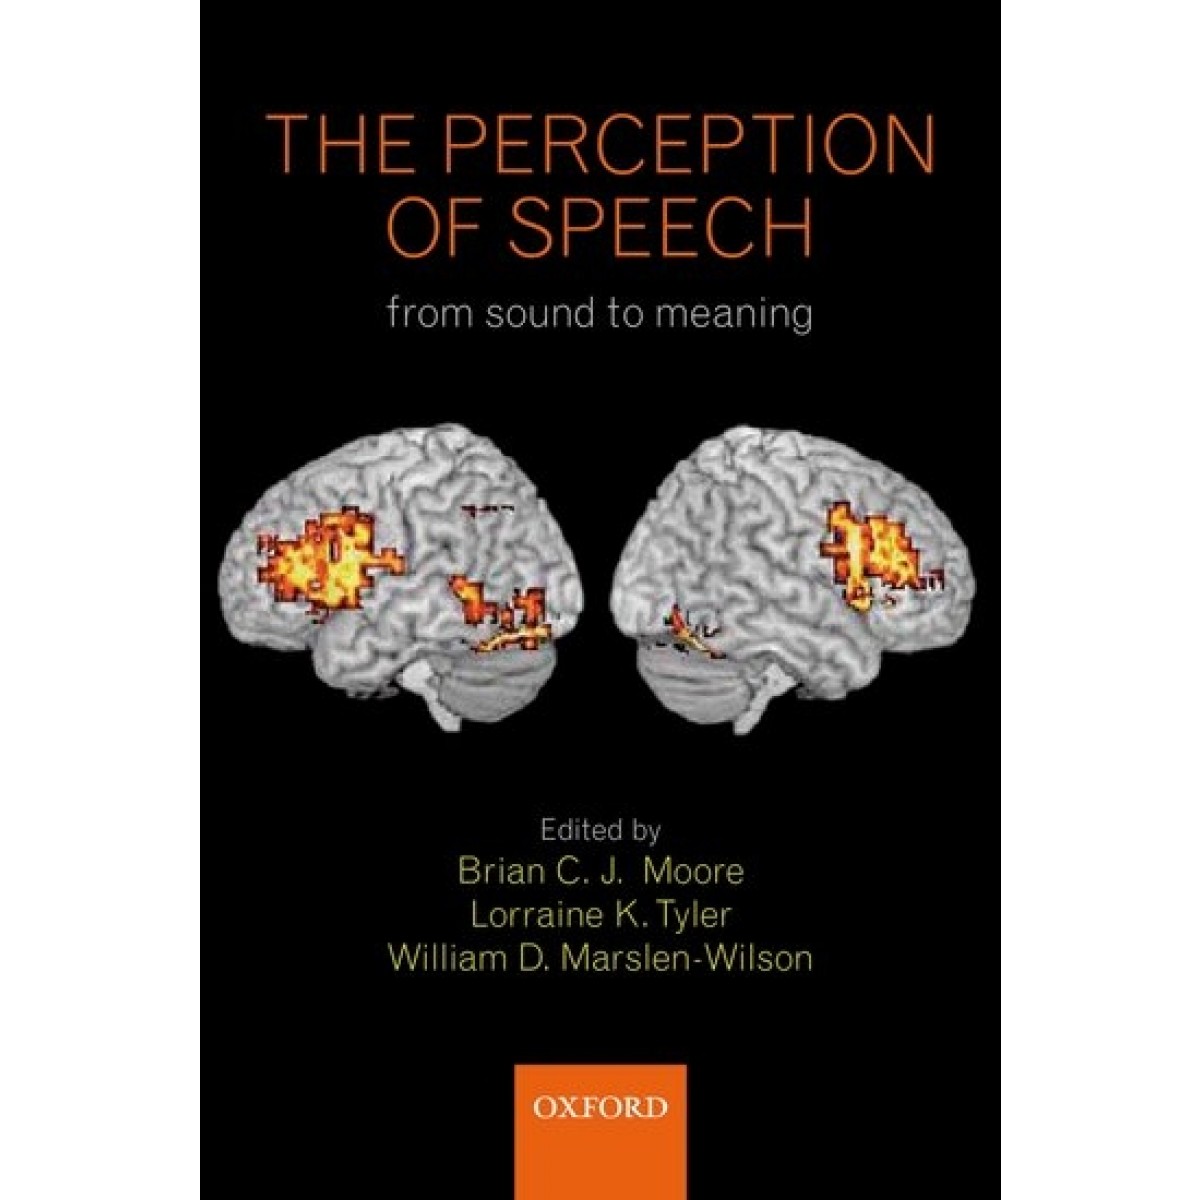 definition of speech perception